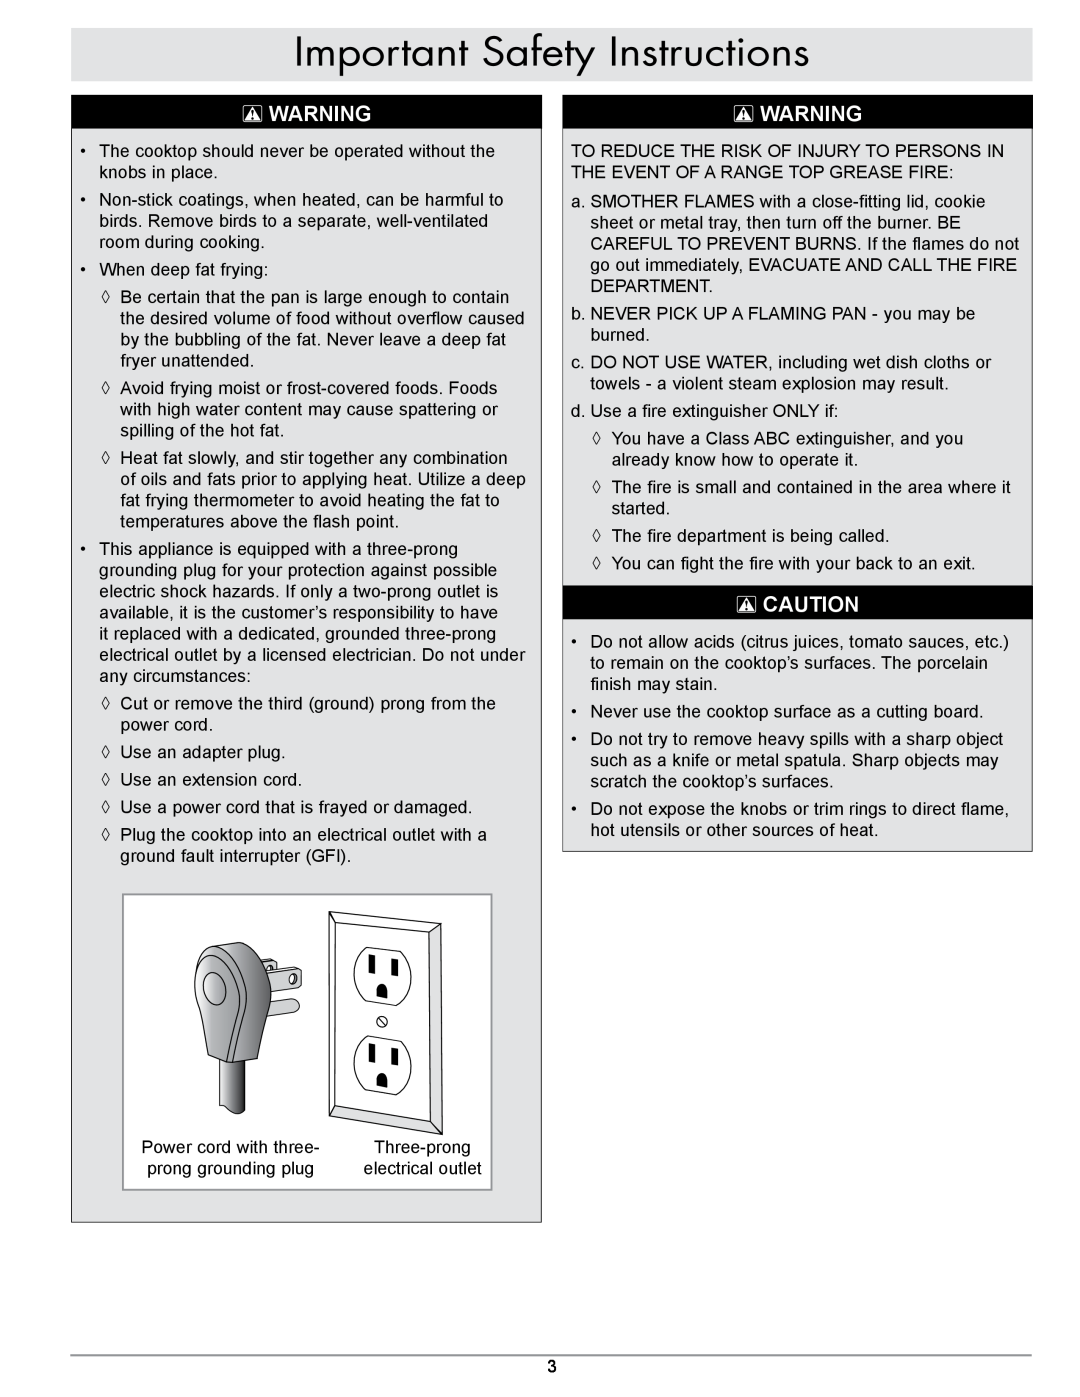 Sears SGM365, SGM466, SGM304 important safety instructions Important Safety Instructions, When deep fat frying 